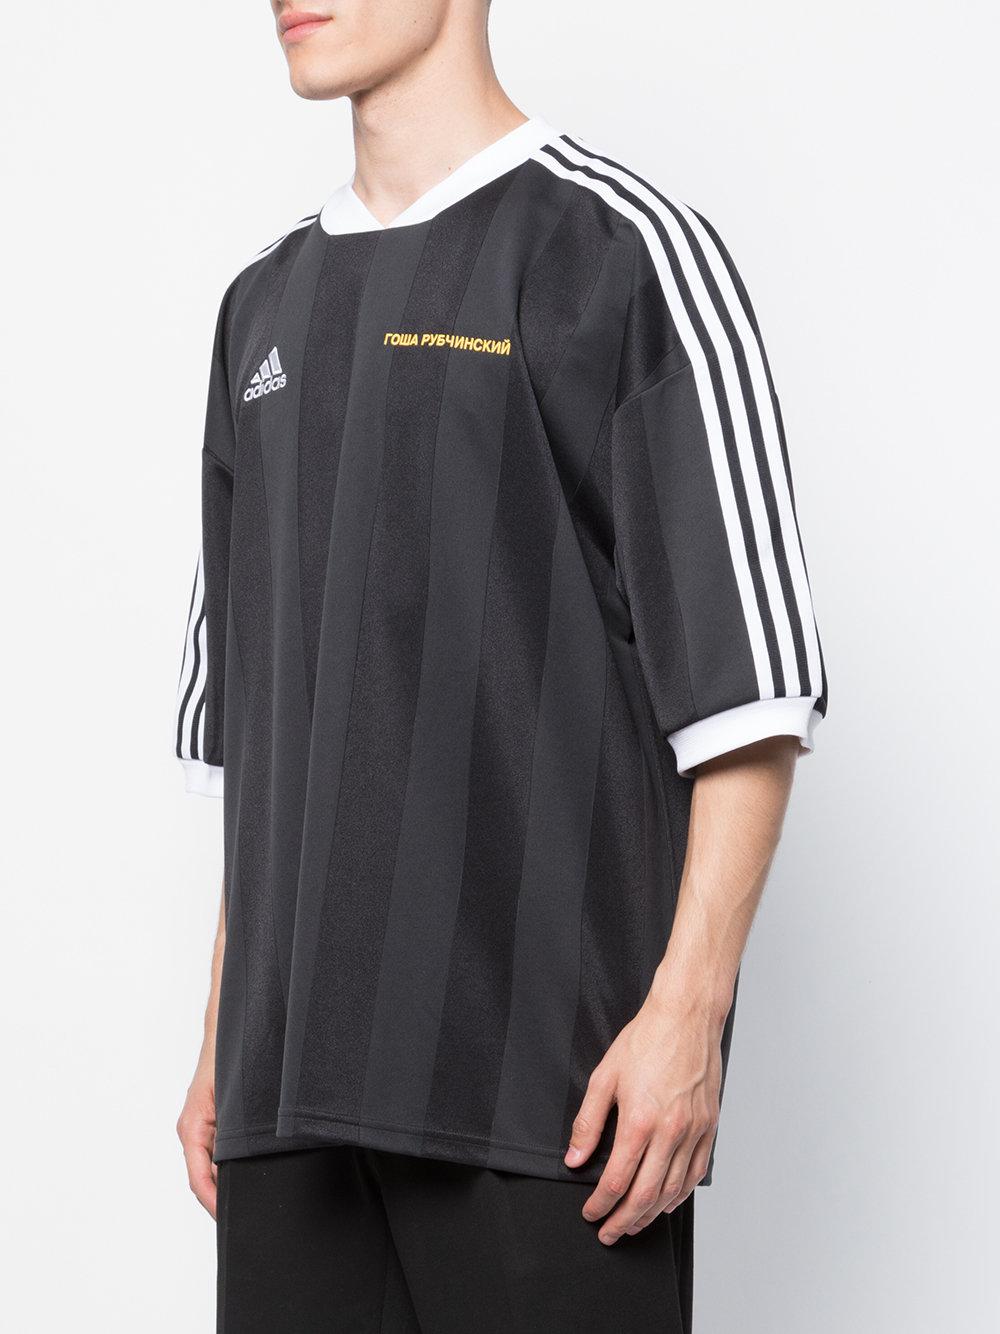 Gosha Rubchinskiy X Adidas Football T-shirt in Black for Men | Lyst